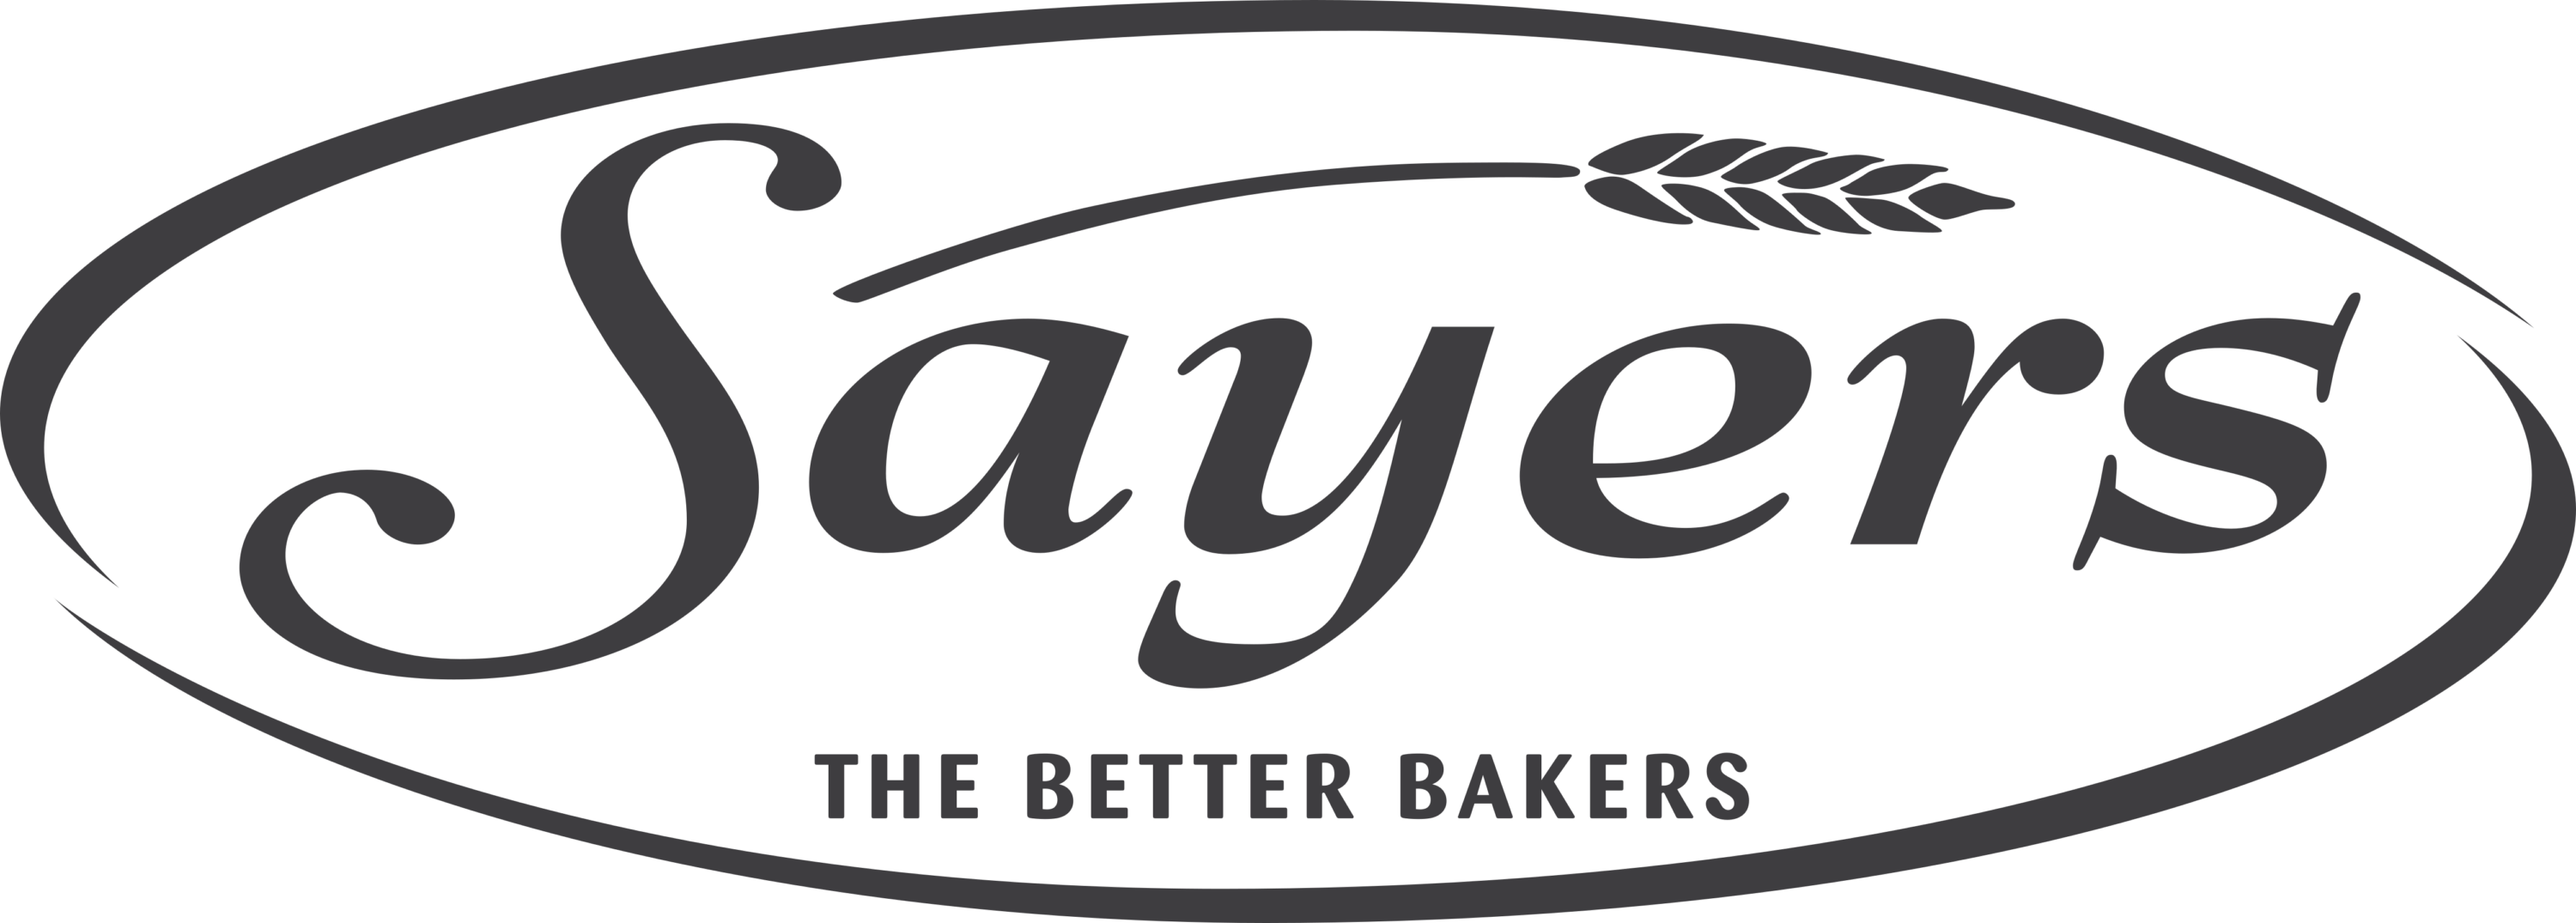 Sayers (bakery) Logo